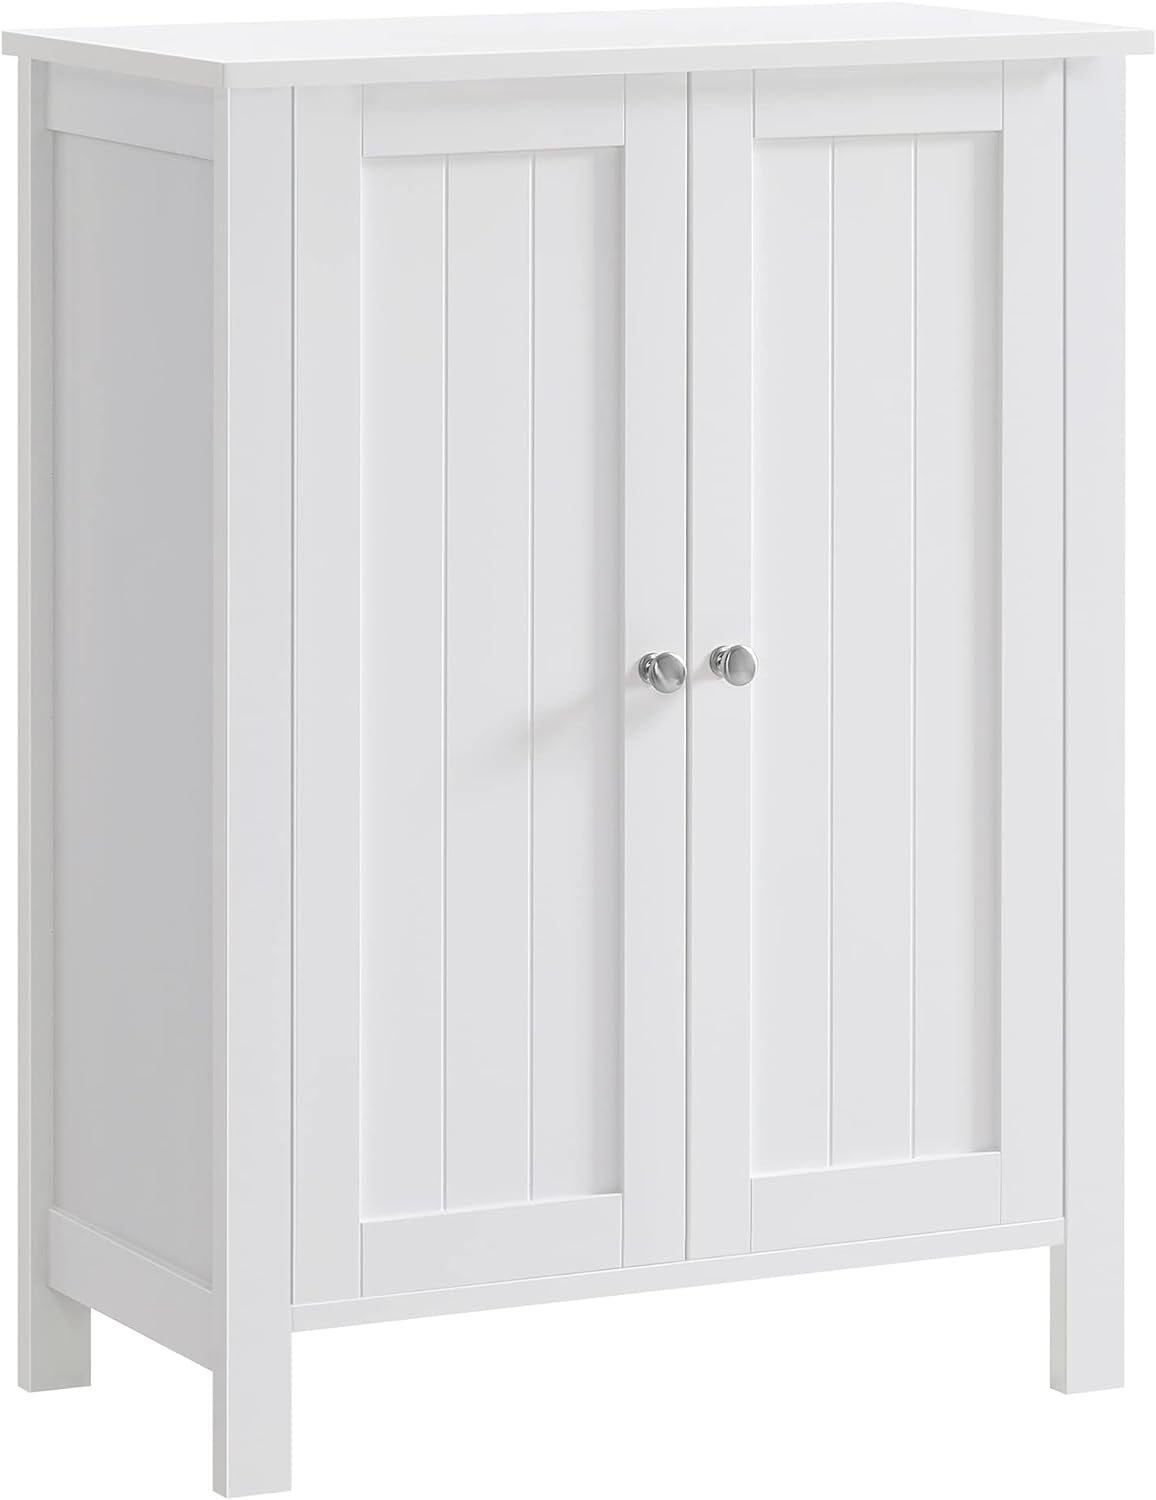 Freestanding Bathroom Floor Storage Cabinet, Storage Cupboard